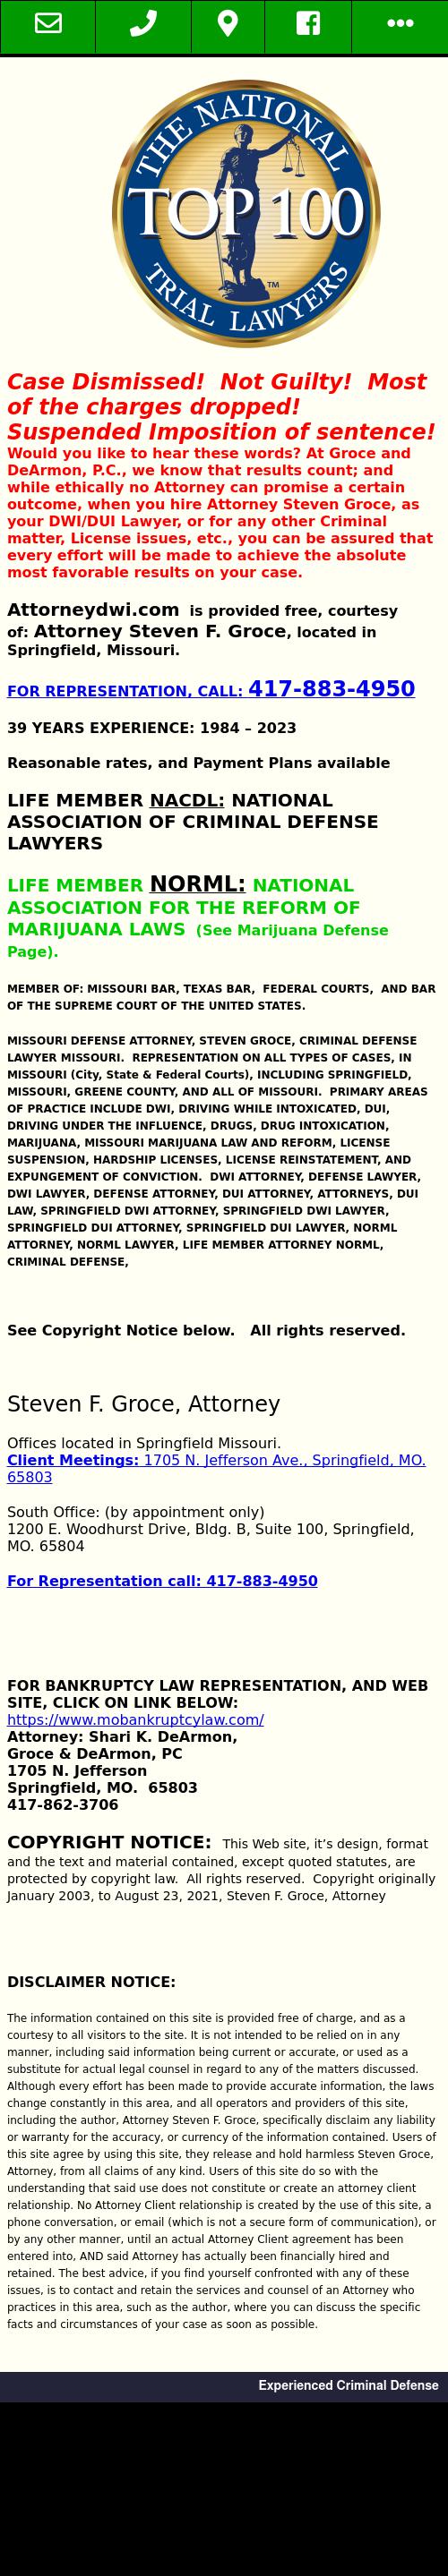 Groce & DeArmon PC - Springfield MO Lawyers